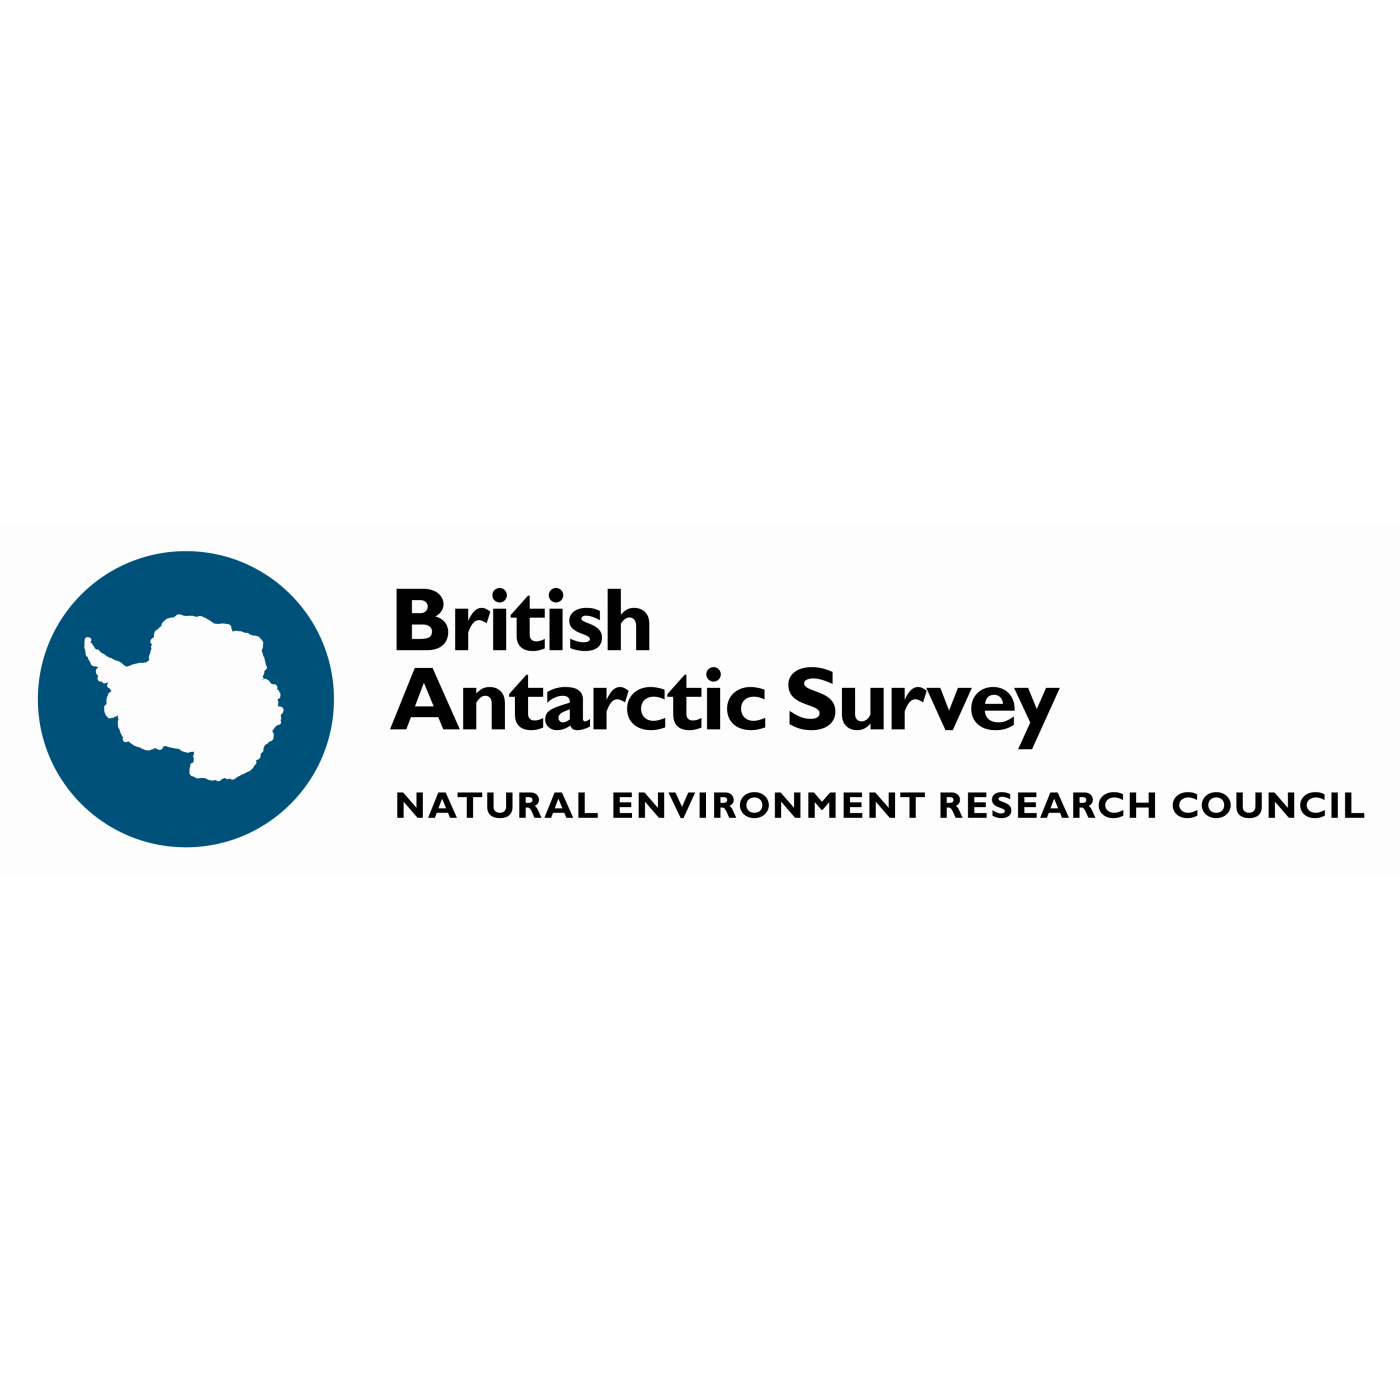 Physics at Work 2020 - British Antarctic Survey's image